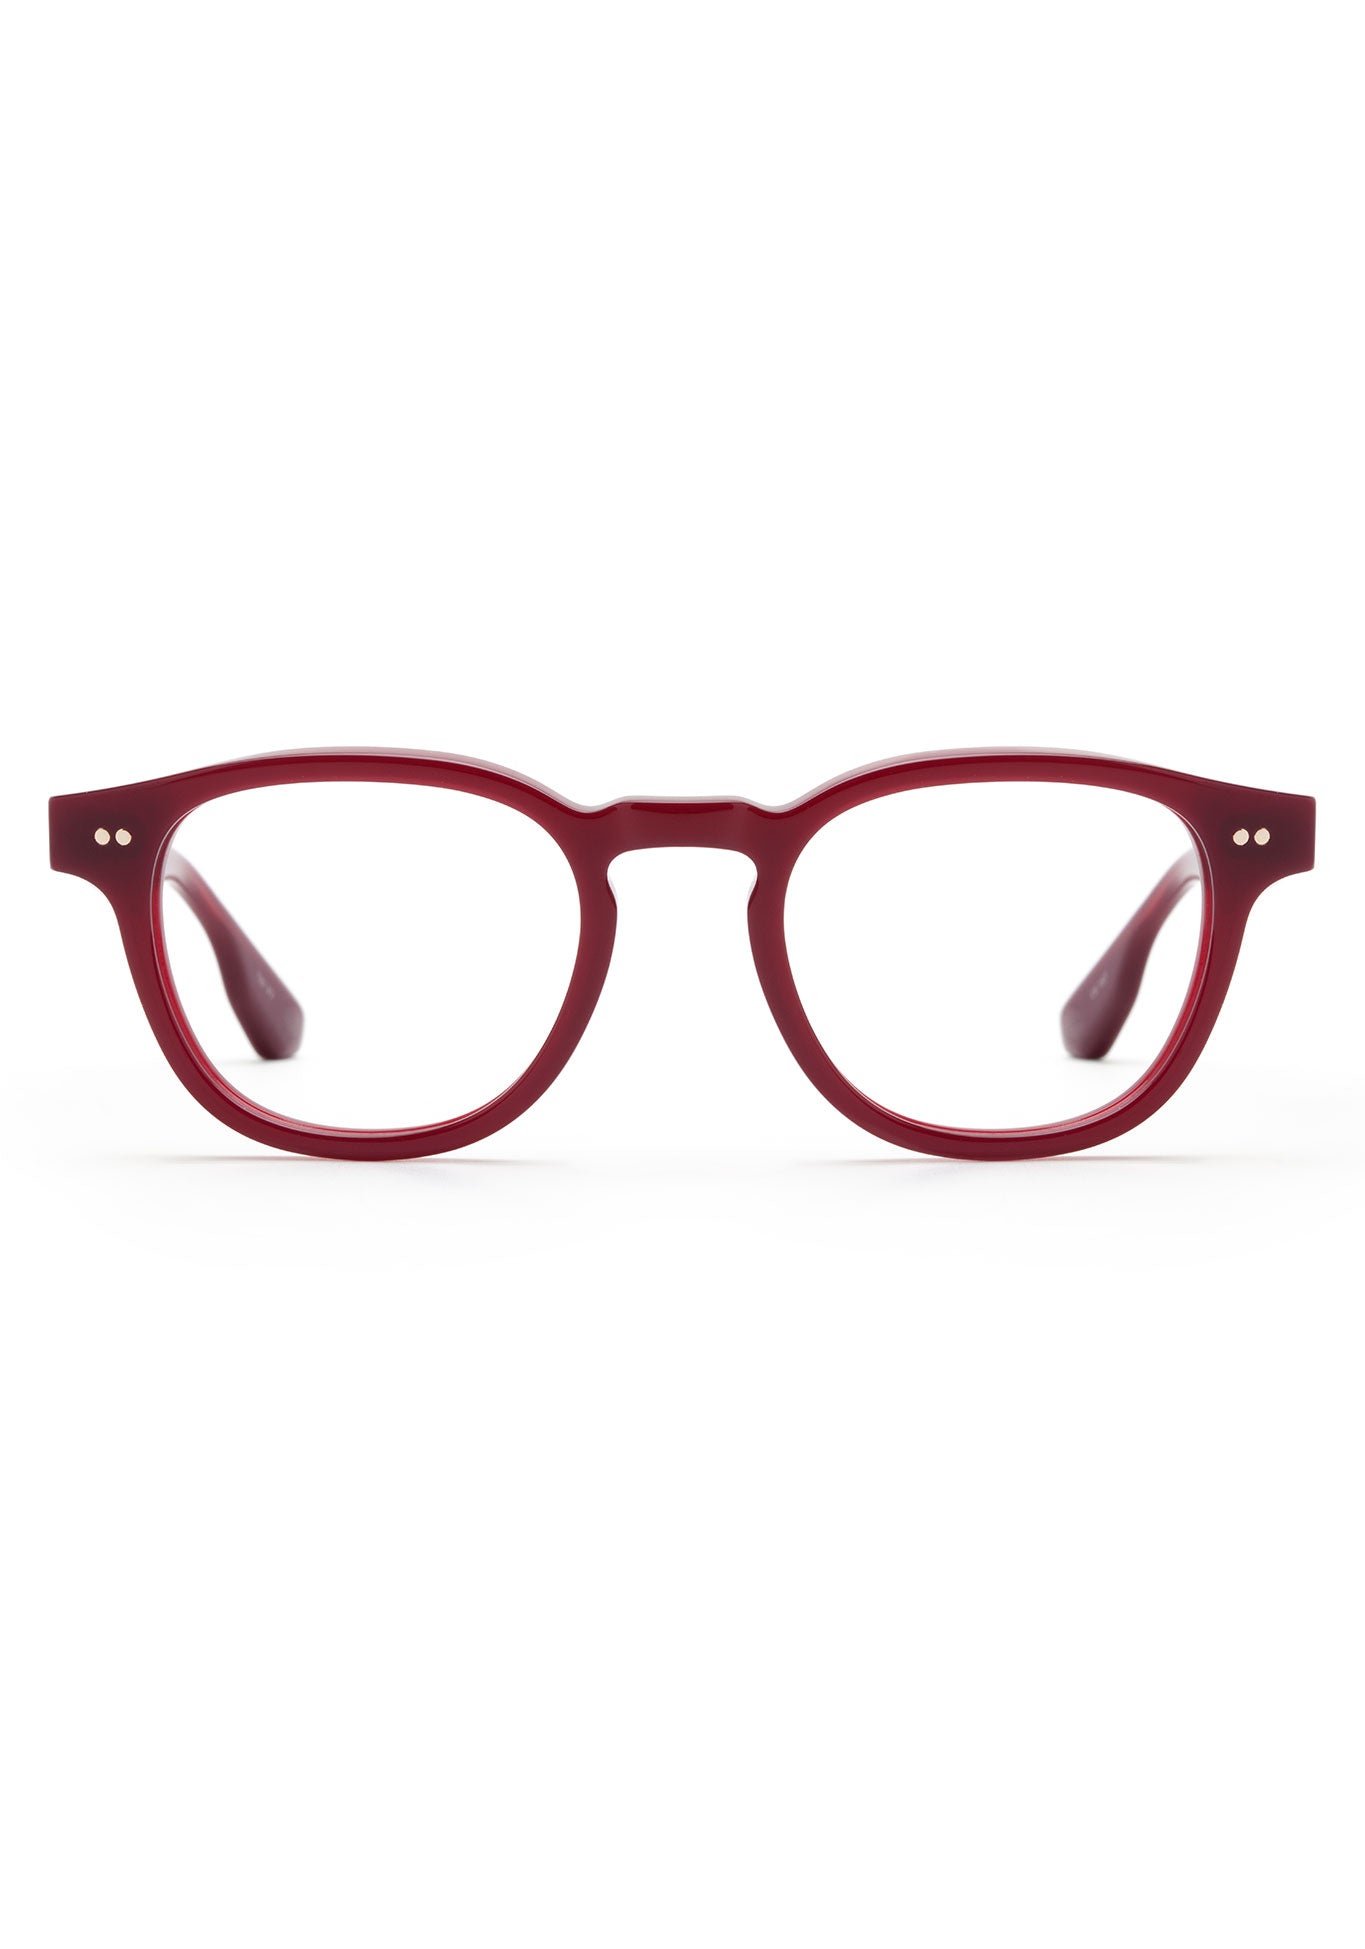 KREWE - MERCER | Brandy Handcrafted, luxury red acetate glasses